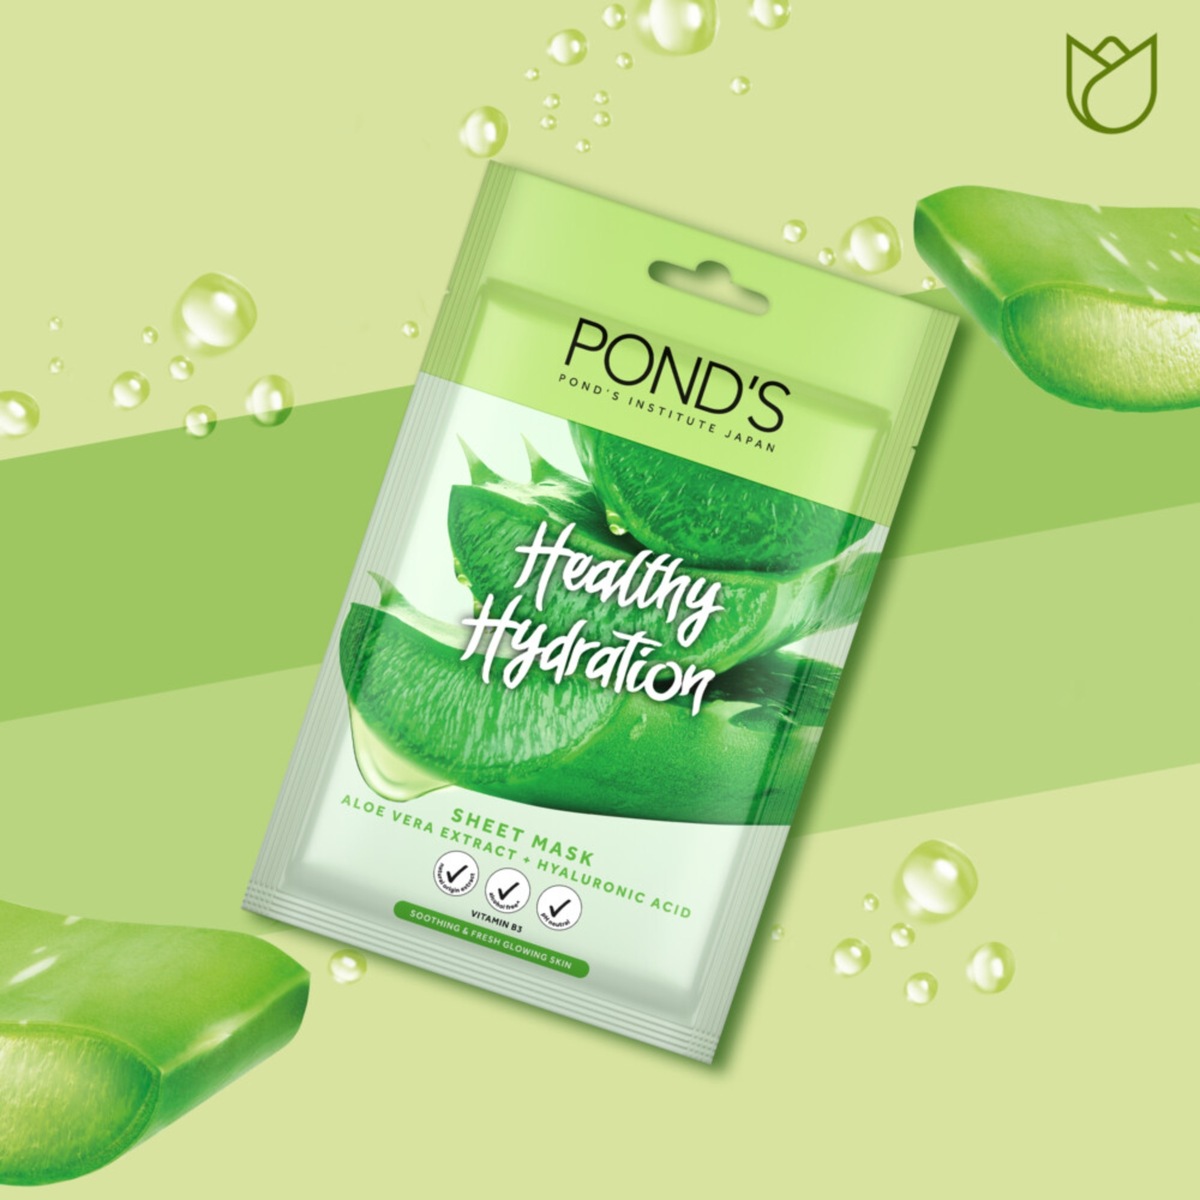 Pond's Healthy Hydration Aloe Vera Sheet Mask 25ml